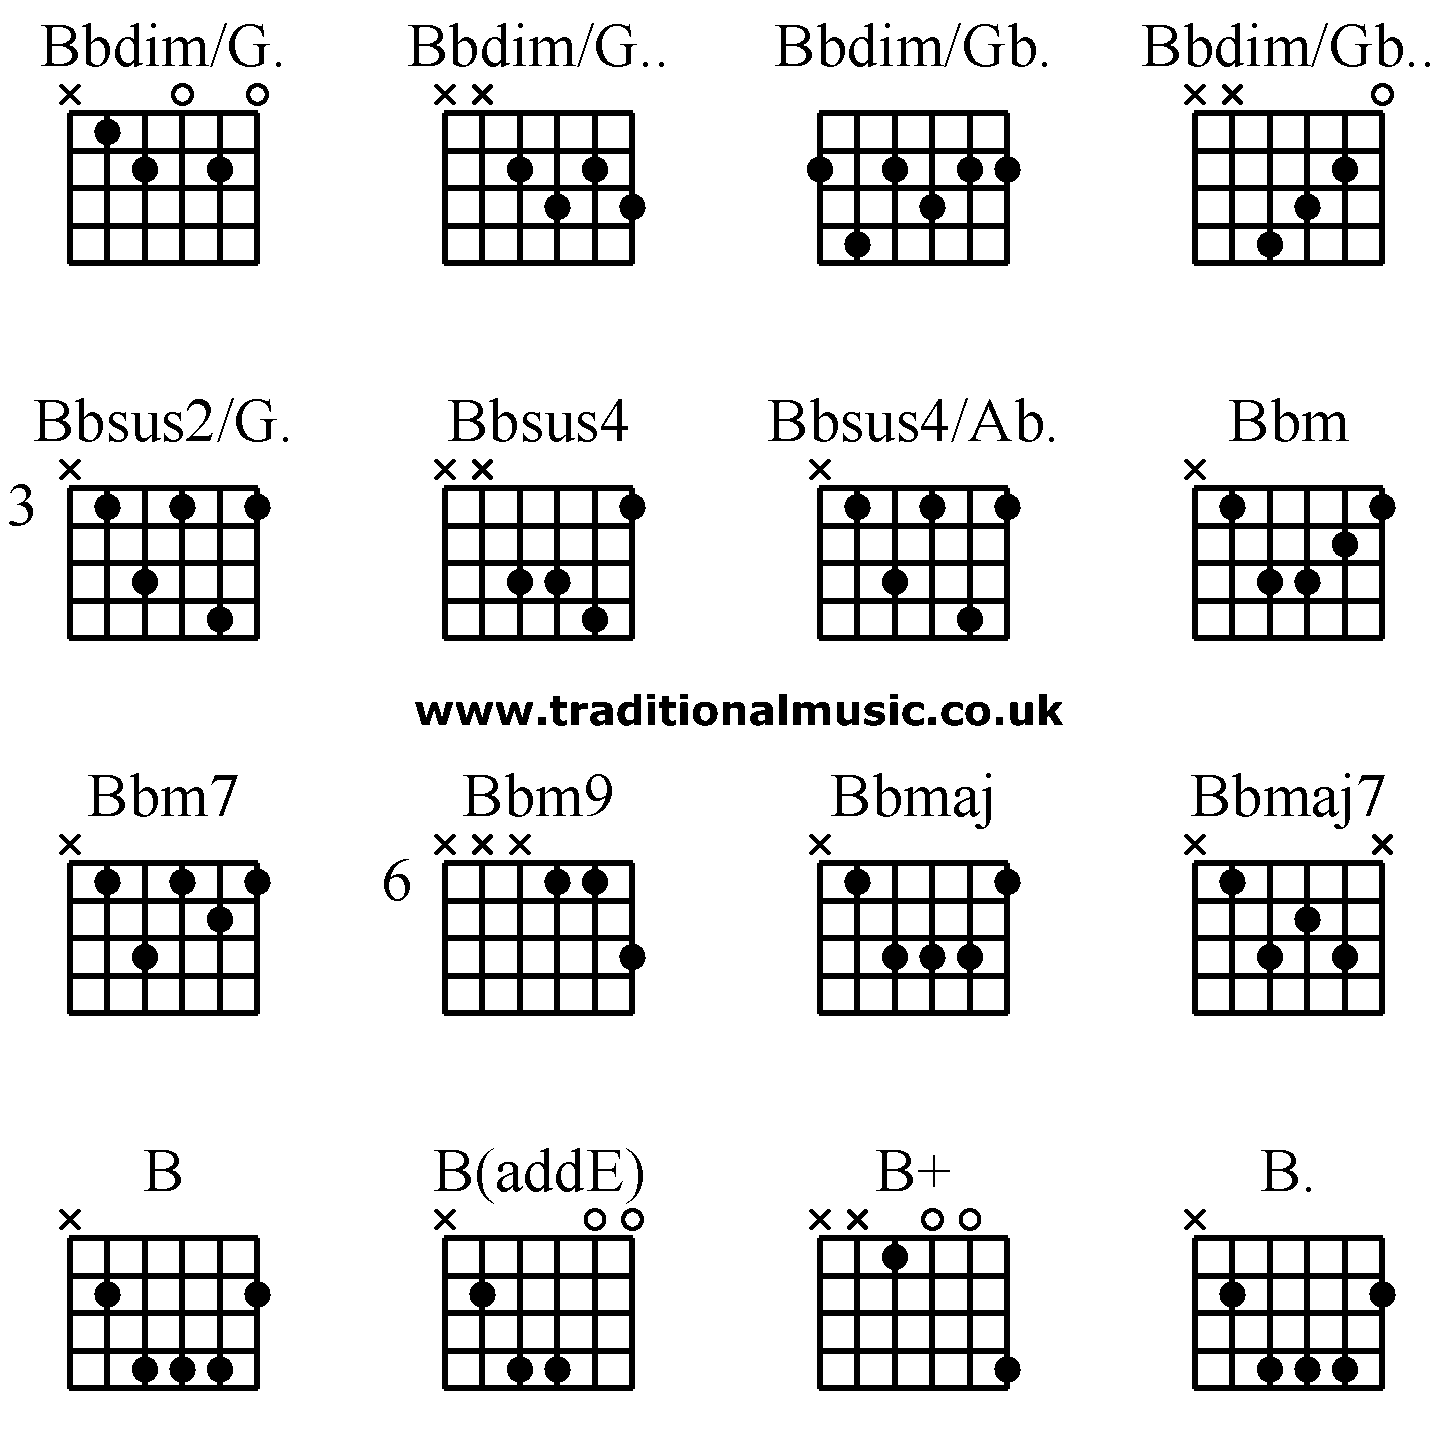 Advanced guitar chords: Bbdim/G. Bbdim/G.. Bbdim/Gb. Bbdim/Gb.. Bbsus2/G. Bbsus4 Bbsus4/Ab. Bbm, Bbm7 Bbm9 Bbmaj Bbmaj7, B B(addE) B+ B.